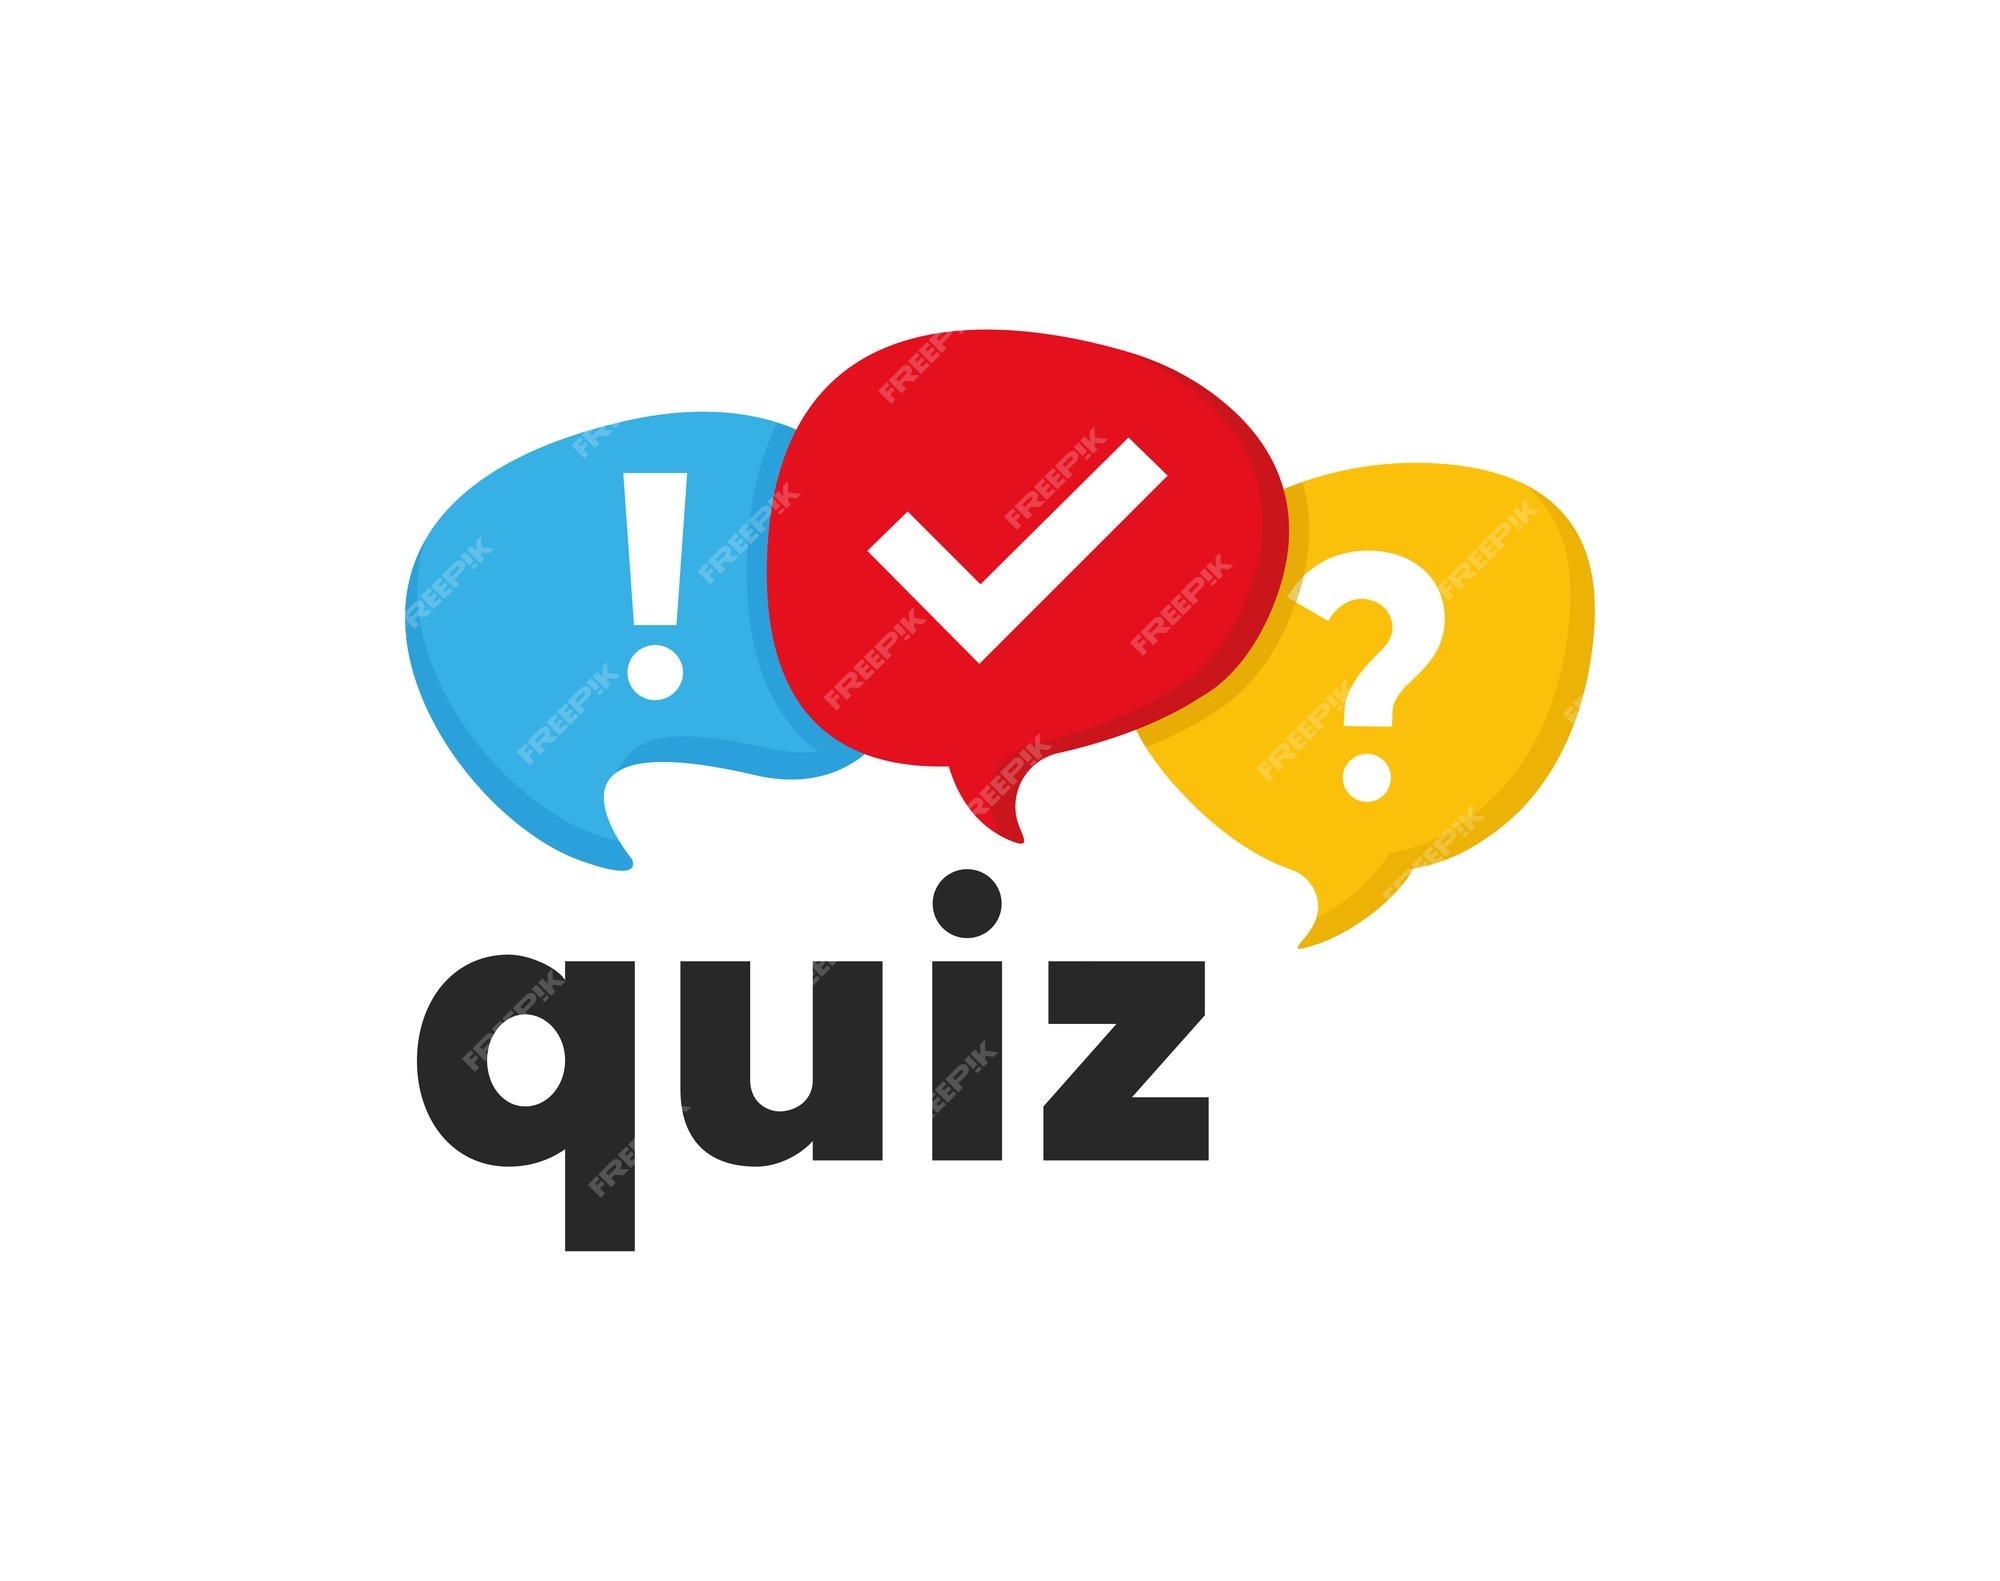 Premium Vector | Quiz logo with speech bubble icon